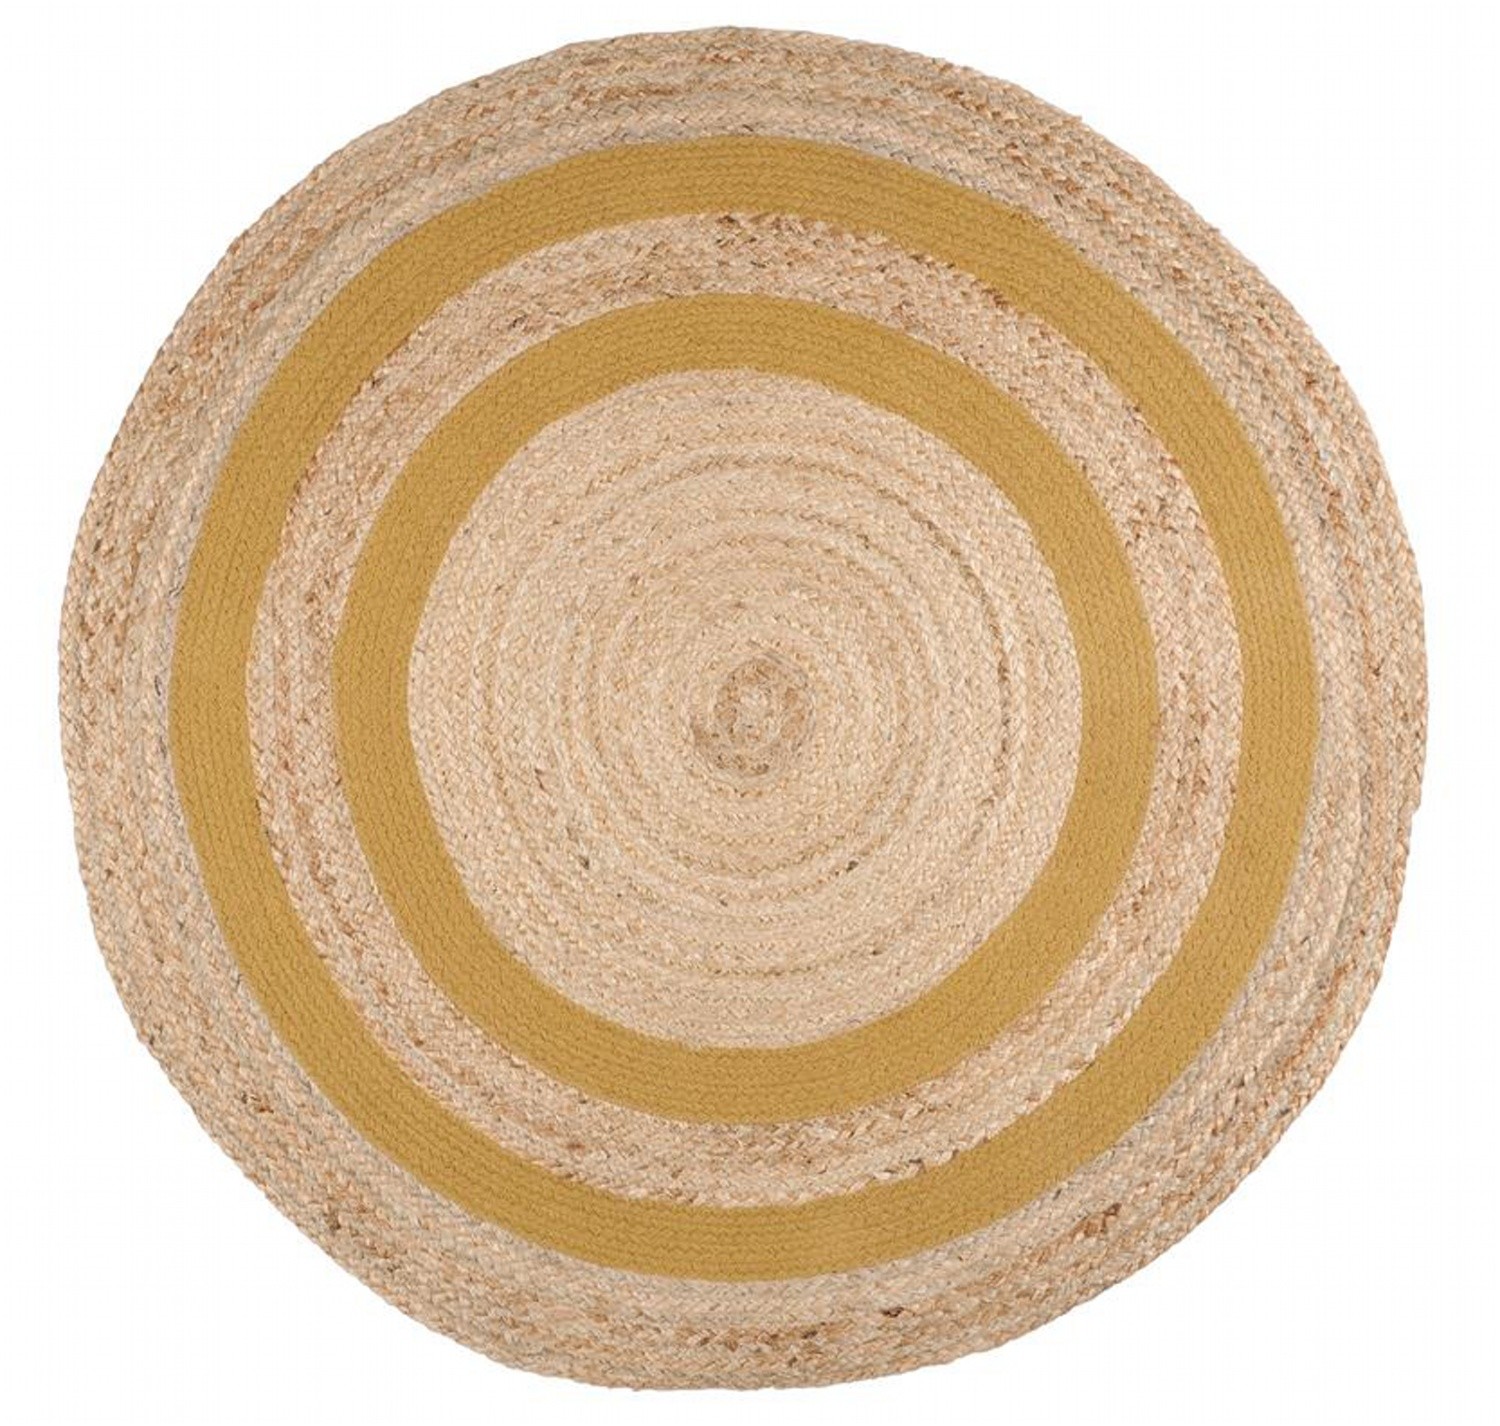 Jutový koberec - rohožka CARPET MAORI béžová/mustard/hořčicová Ø 90 cm France